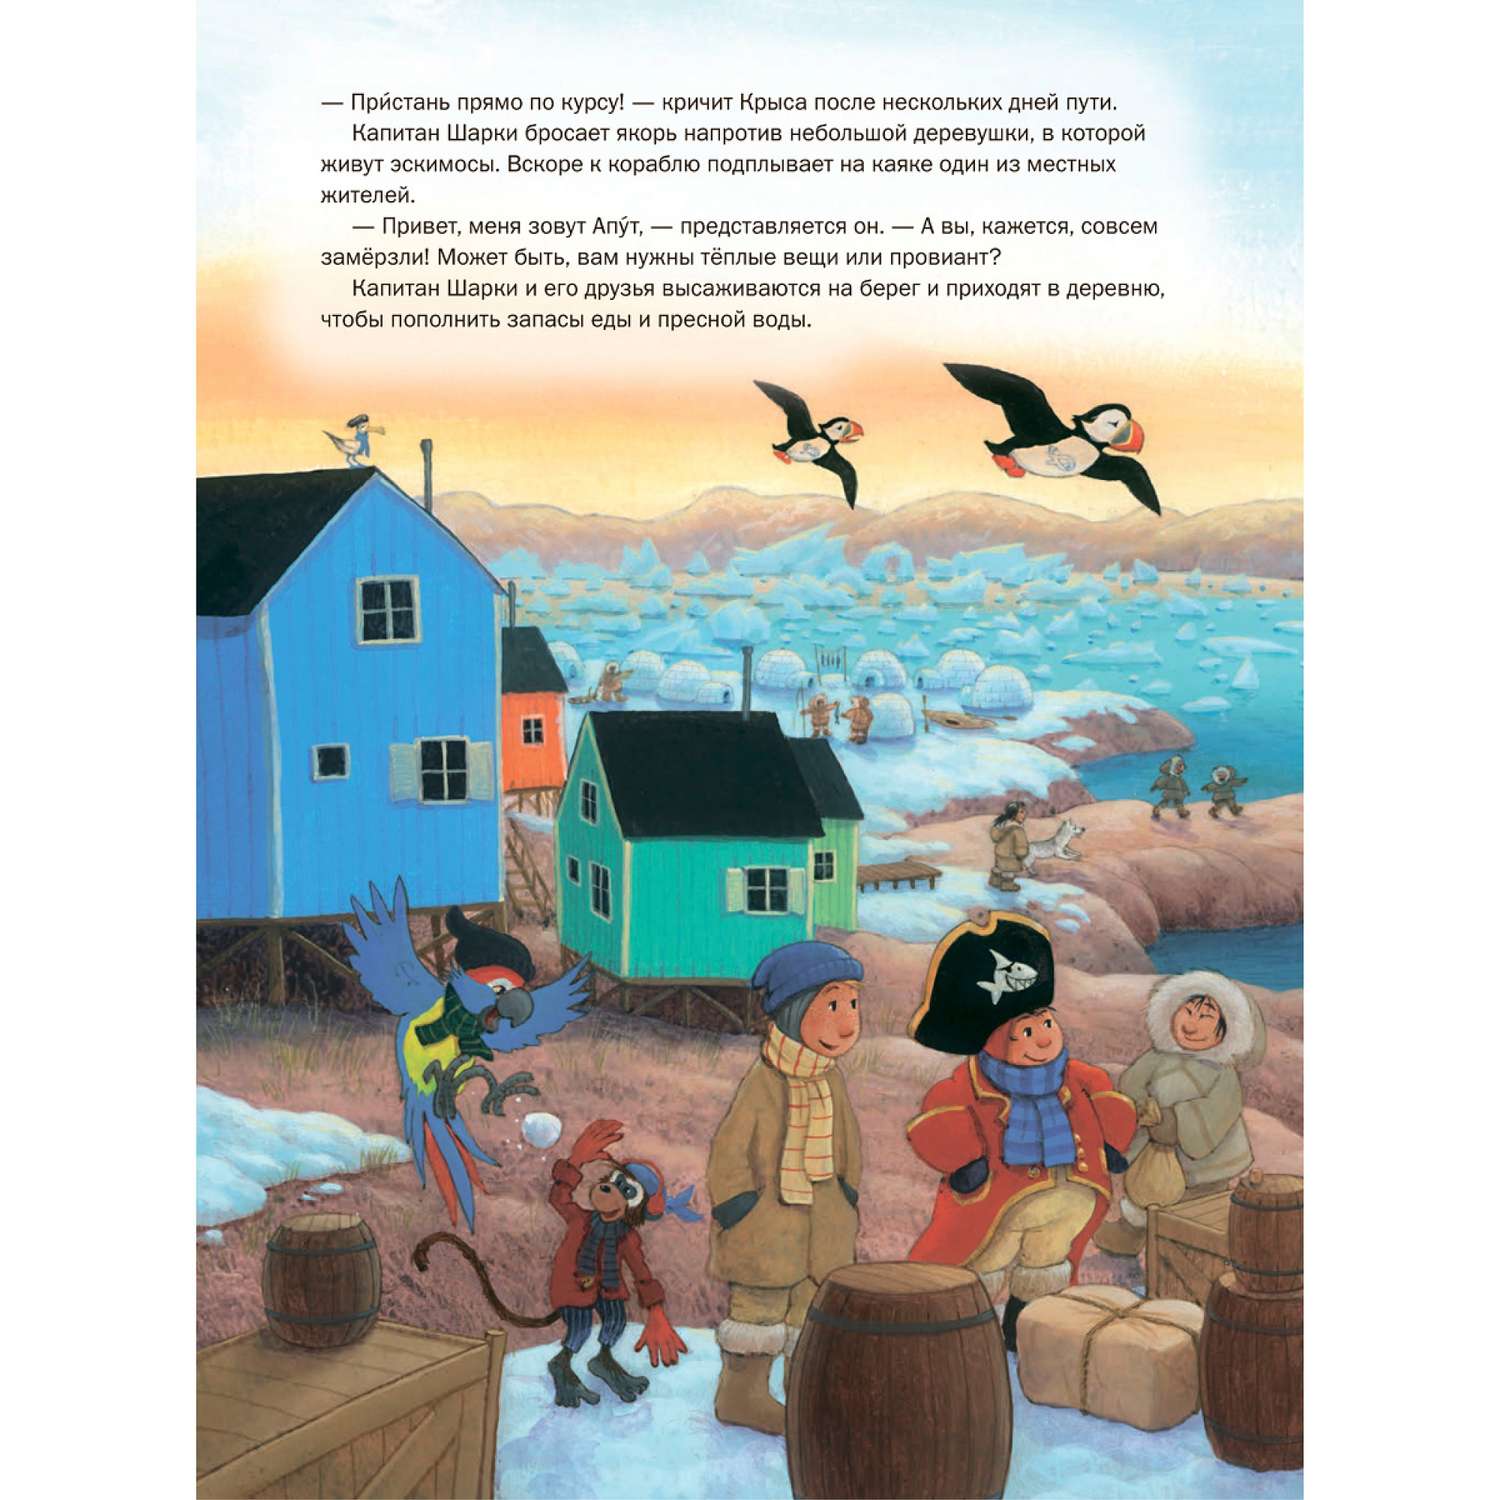 Книга Добрая книга Капитан Шарки спасает малютку кита. Иллюстрации Сильвио Нойендорфа - фото 10